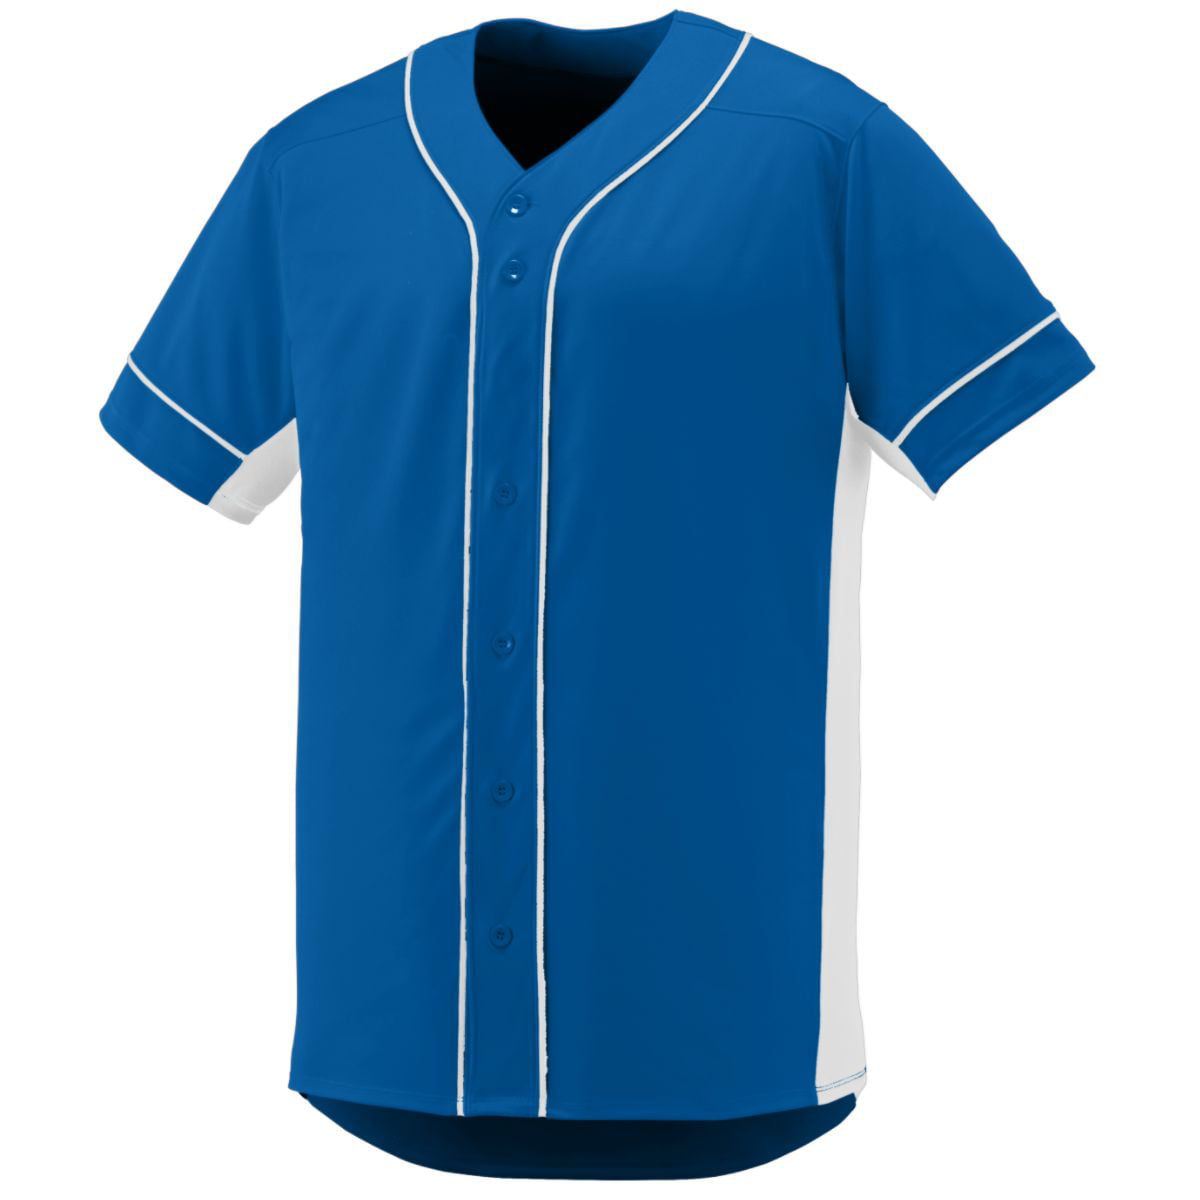 men's baseball jersey tops